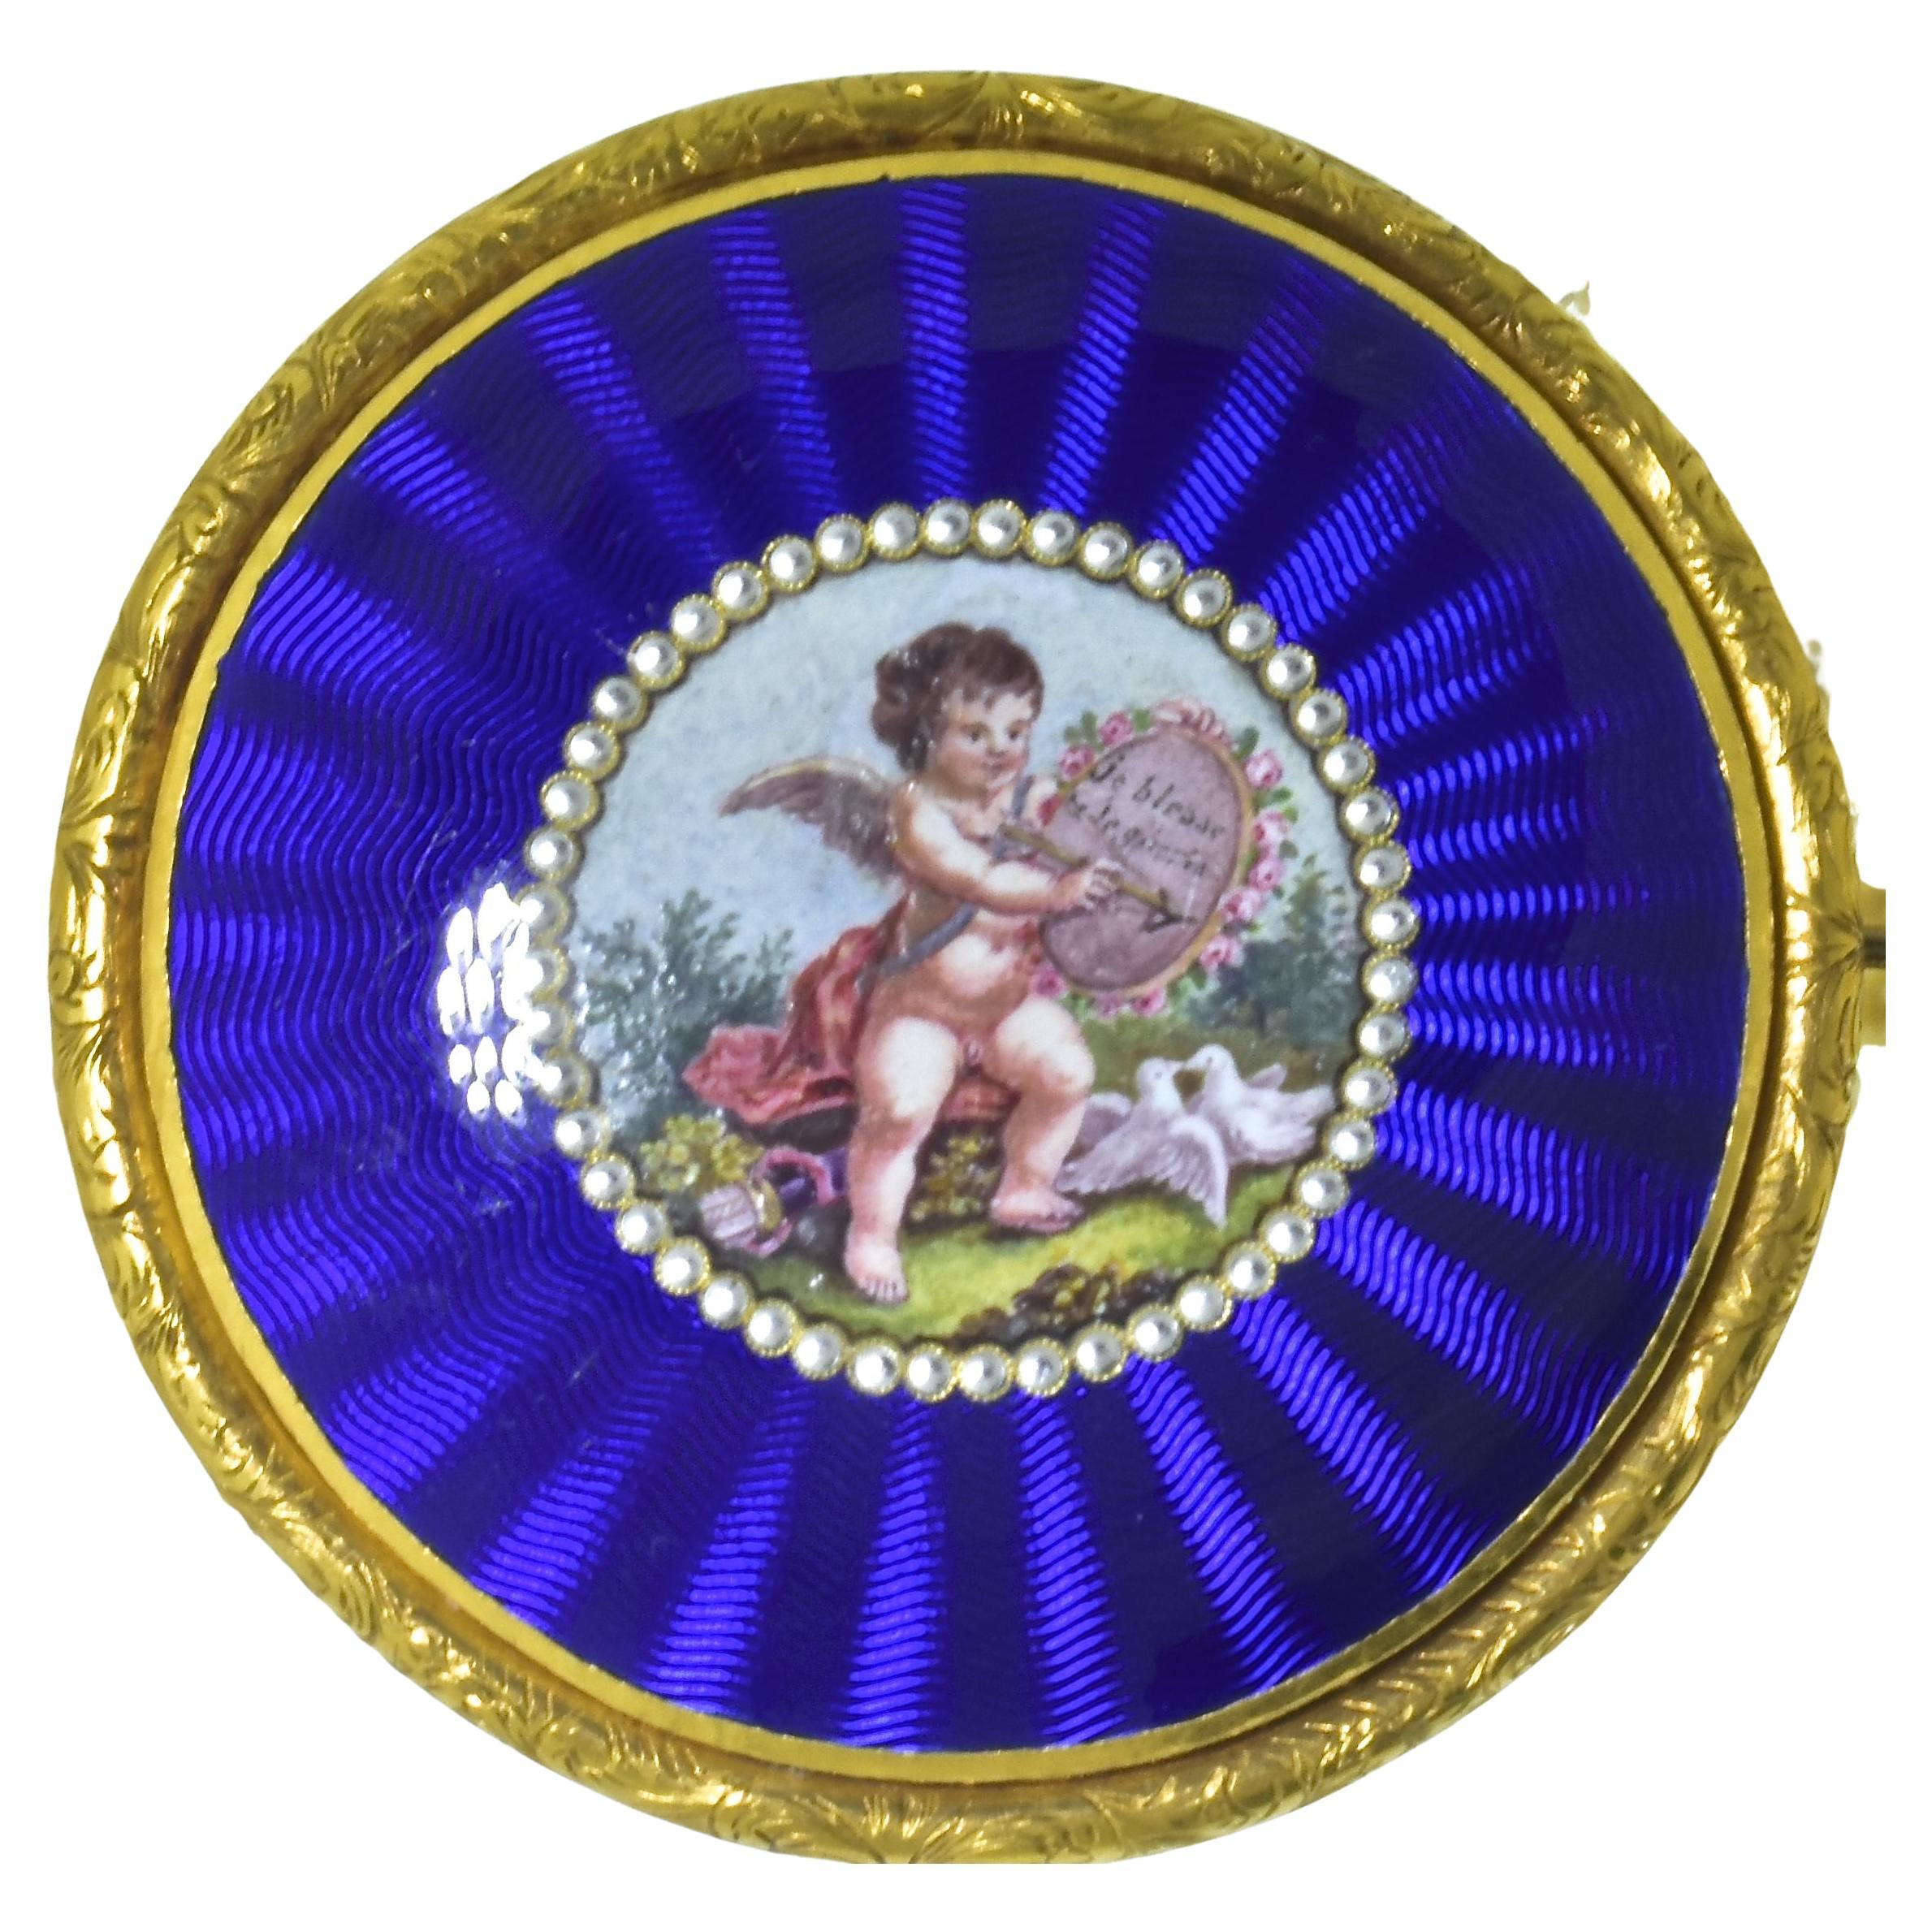 Antique Enamel Brooch on Woven Pearl Collar, C. 1800